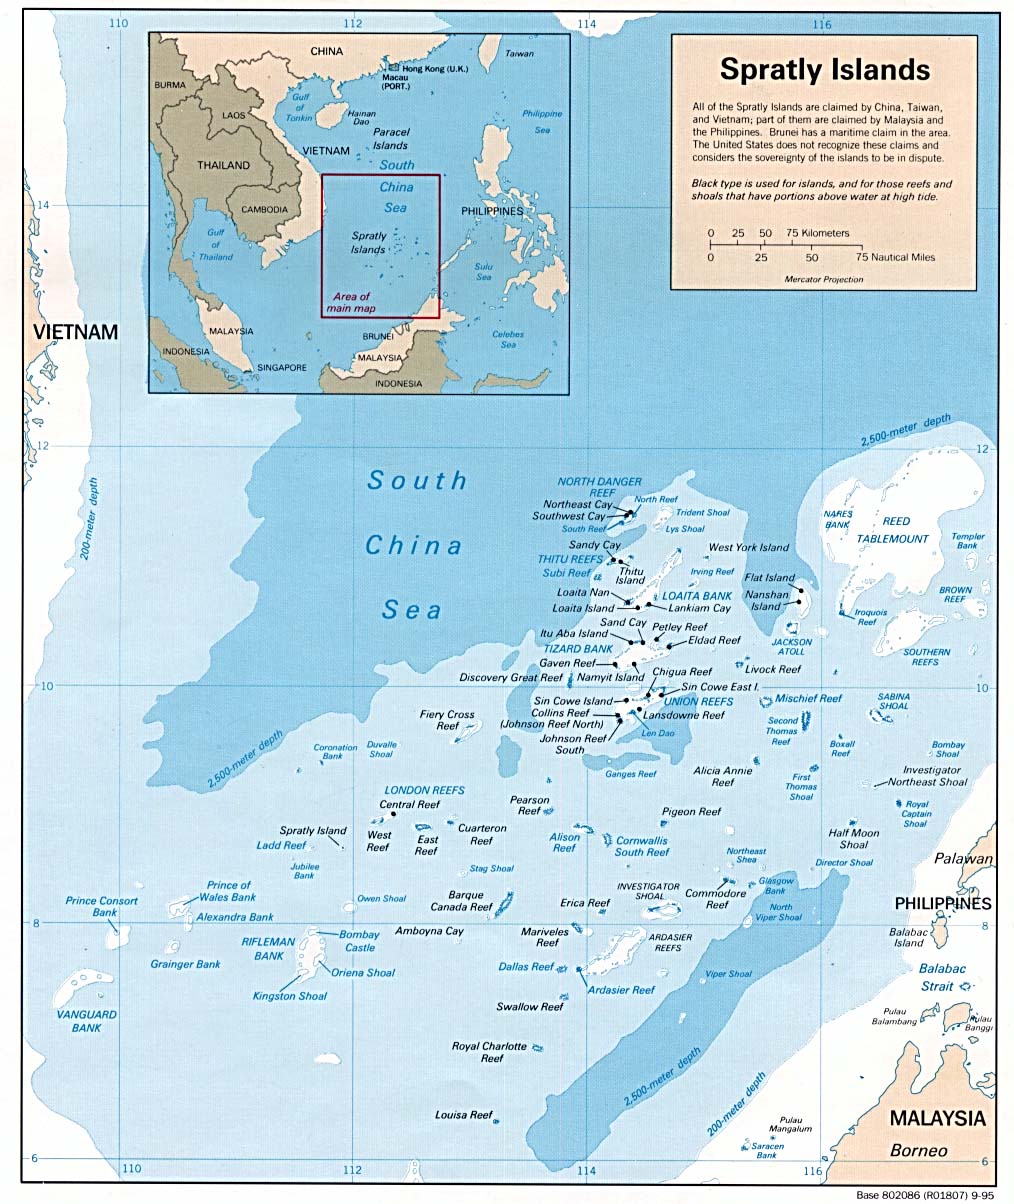 http://www.lib.utexas.edu/maps/middle_east_and_asia/spratly_95.jpg